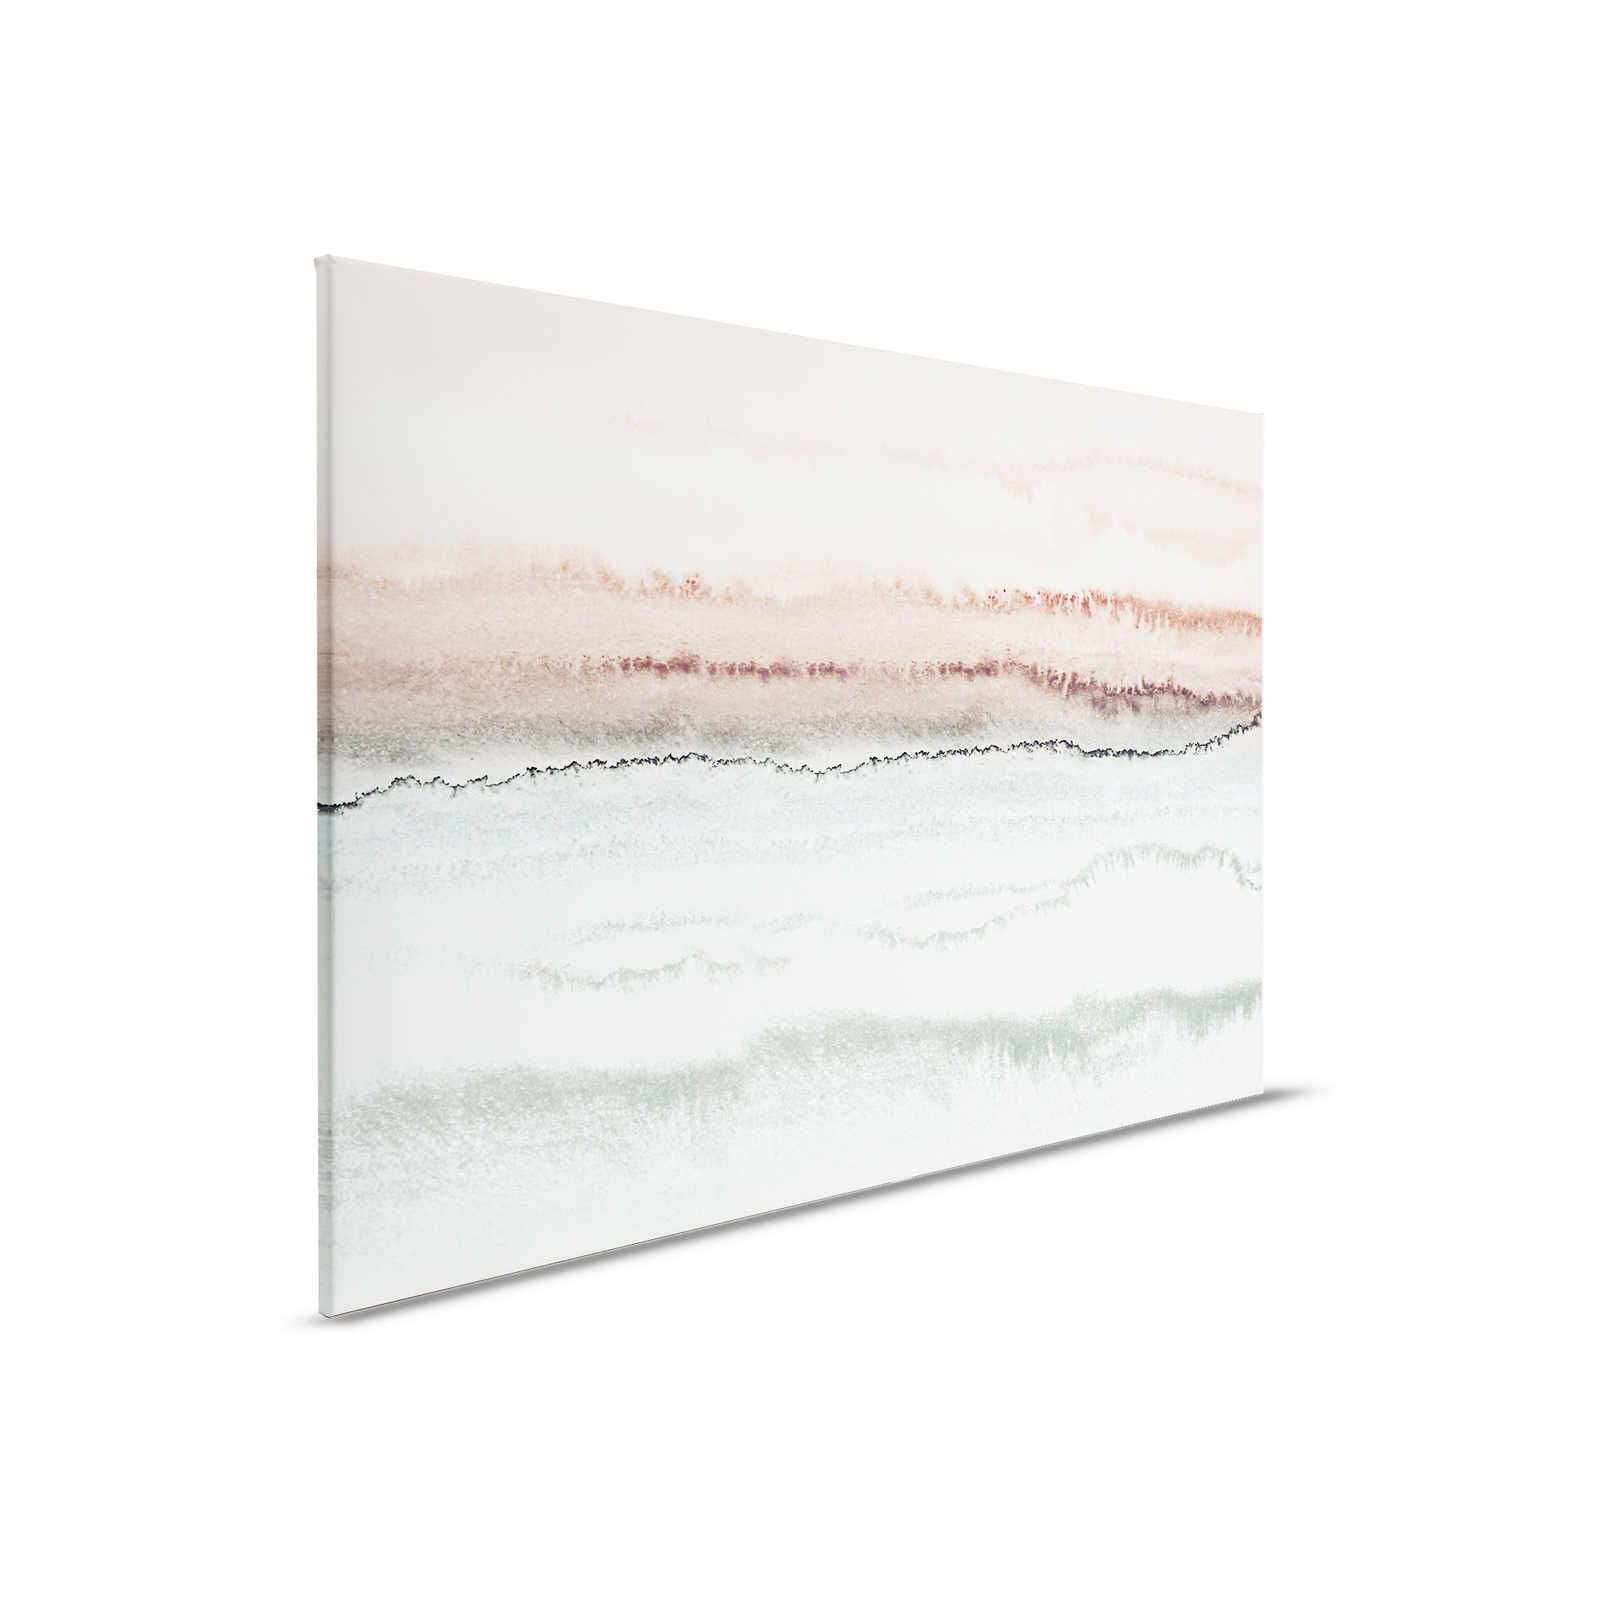         Aquarell Leinwandbild mit abstrakter Landschaft & Farbverlauf – 0,90 m x 0,60 m
    